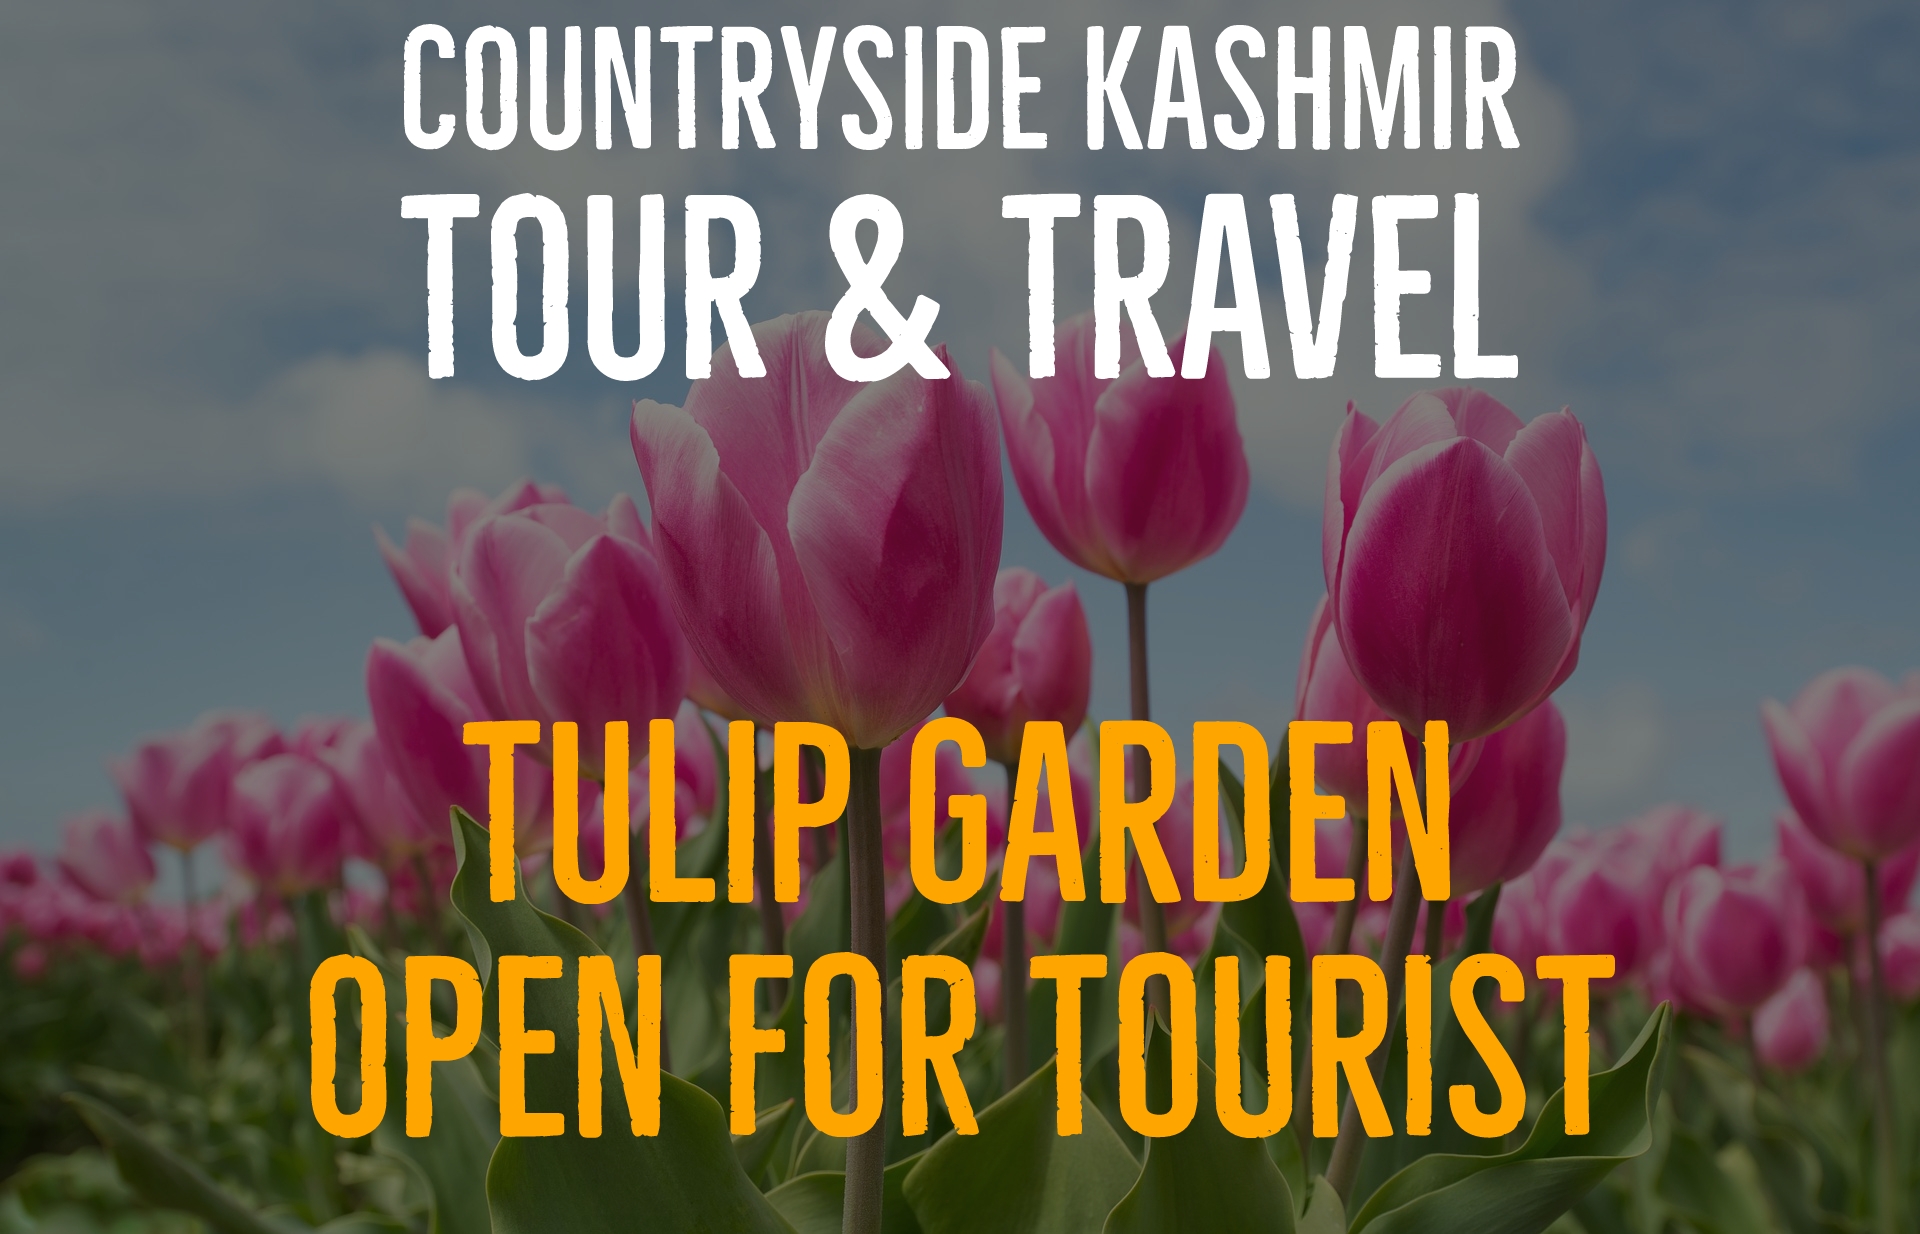 Tulip Garden thrown open for visitors - Countryside Kashmir